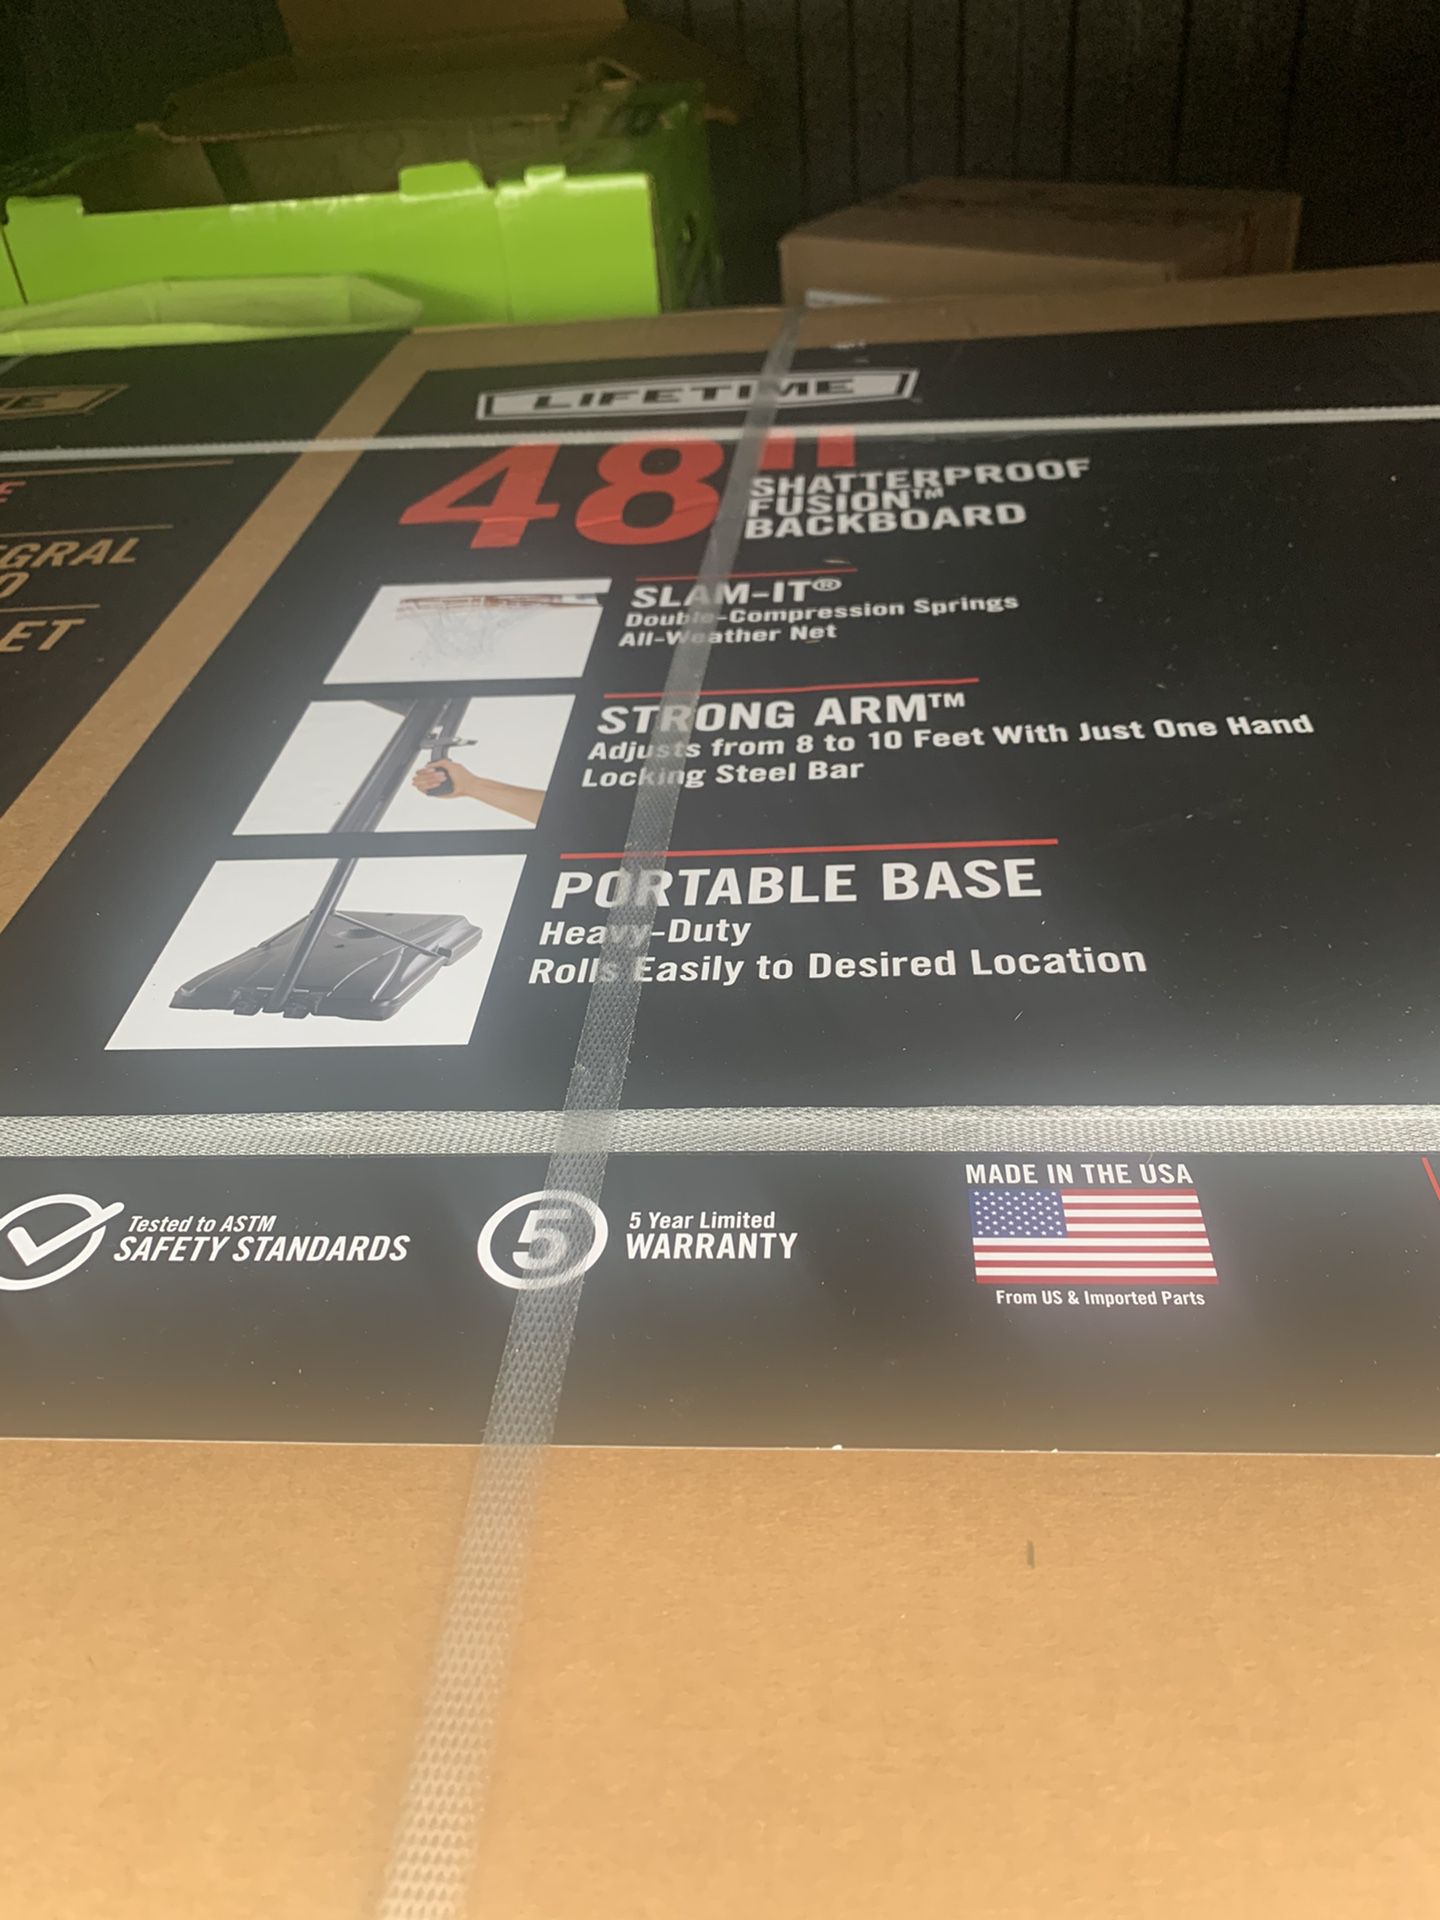 Lifetime 48” basketball hoop Brand NEW in box